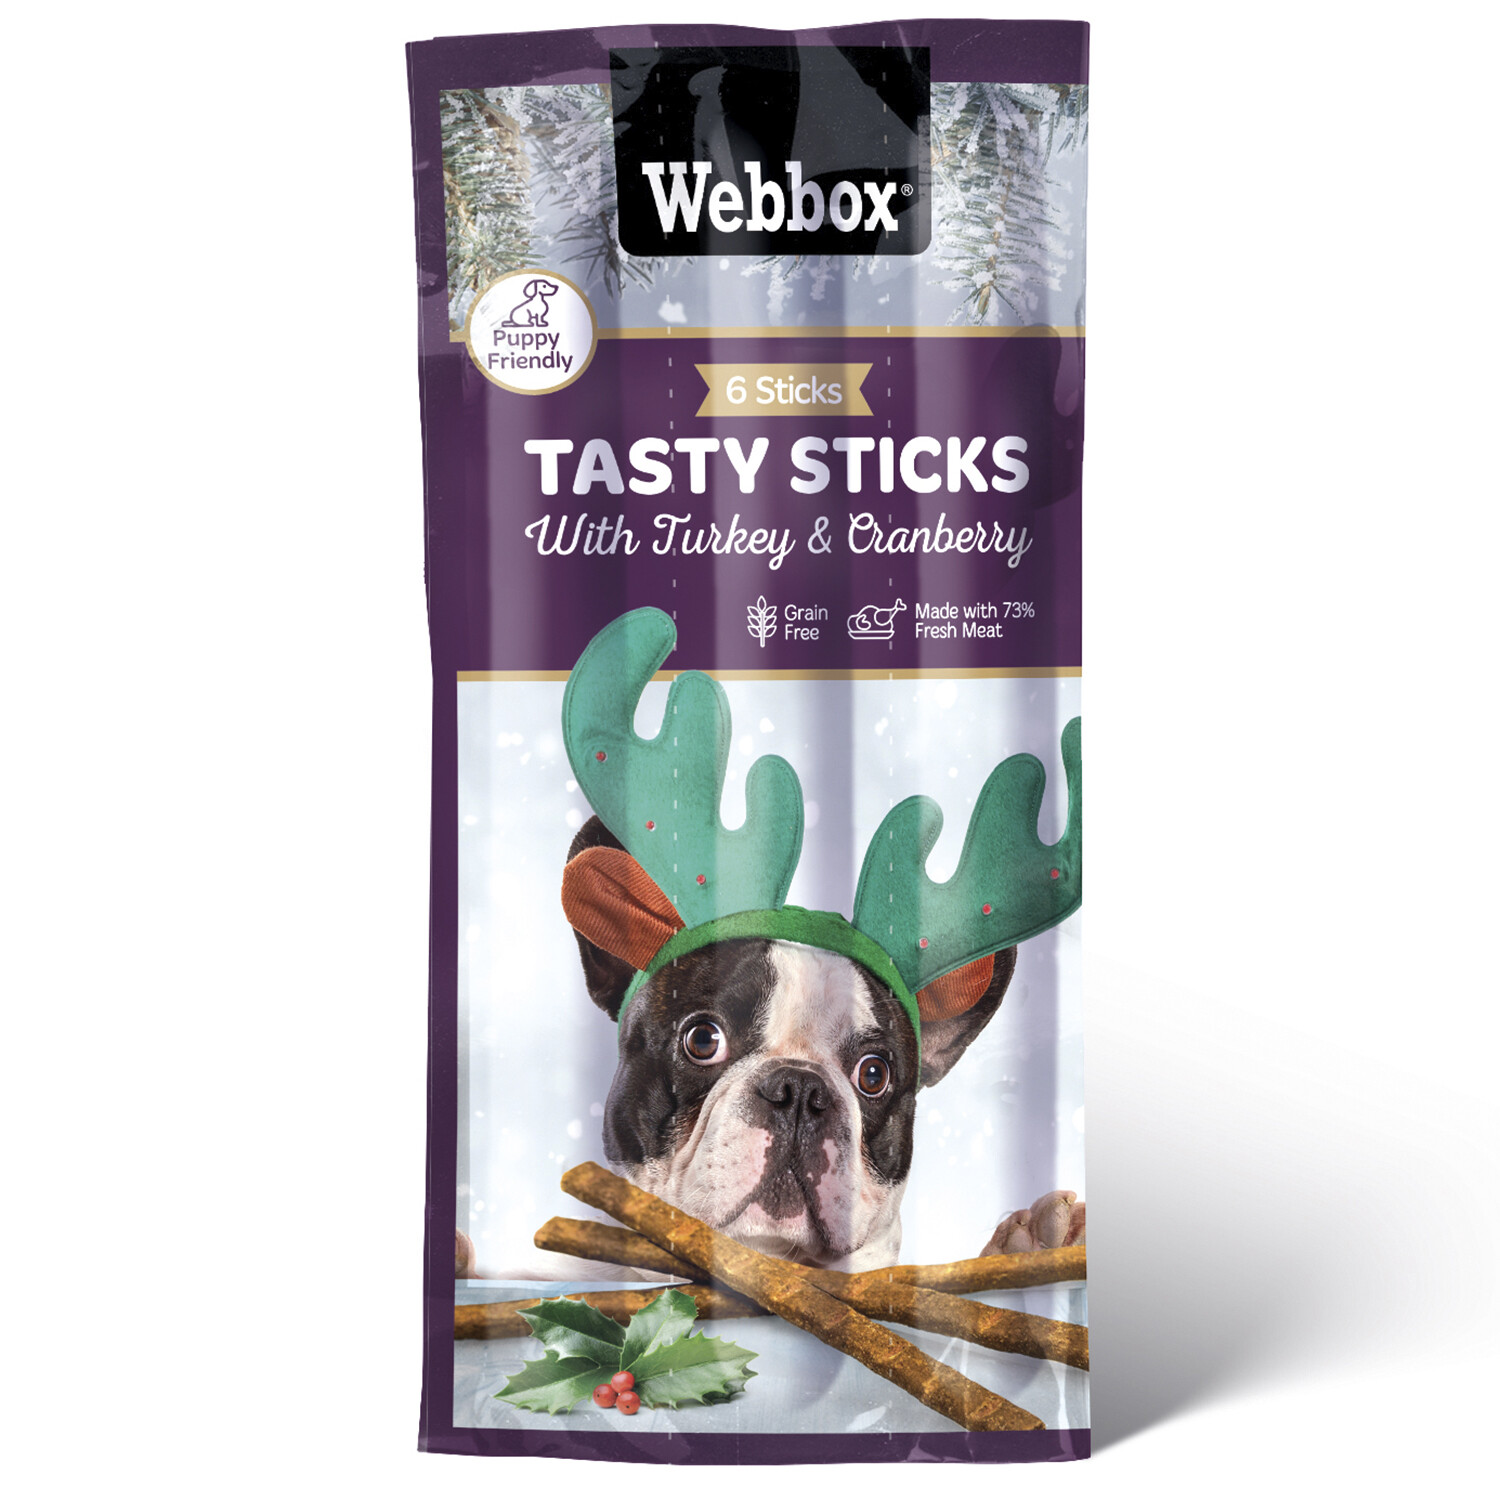 Pack of 6 Webbox Tasty Sticks for Dogs Image